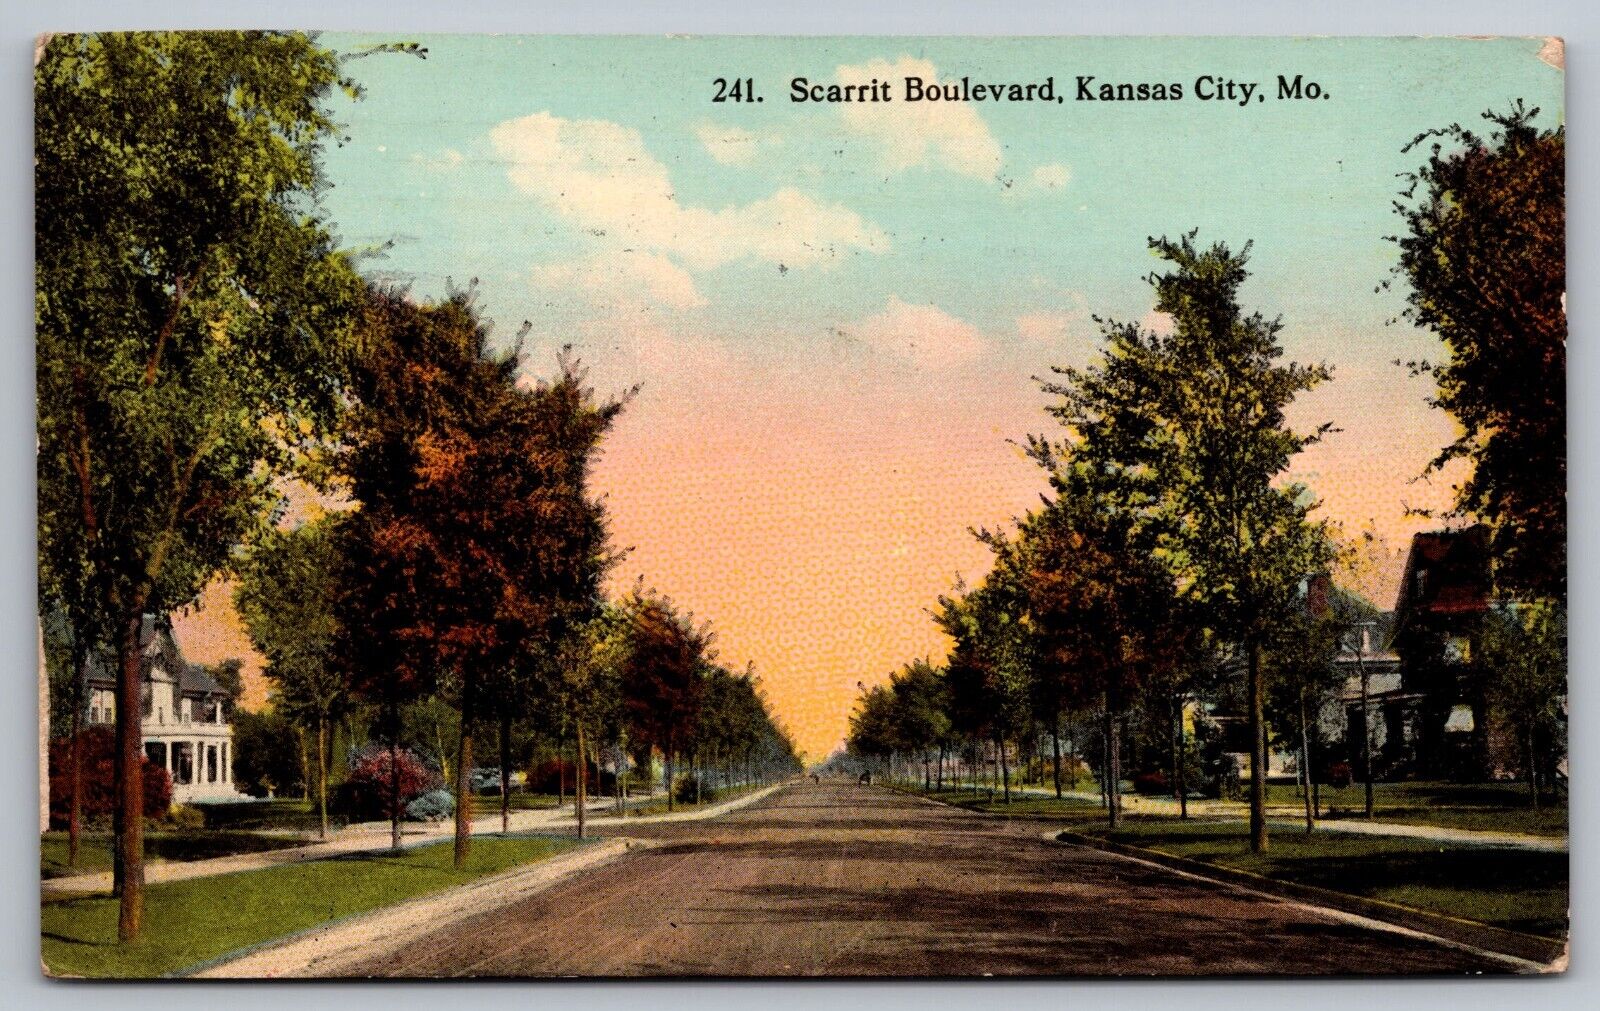 Scarrit Boulevard Kansas City Missouri-Antique Postcard c1913